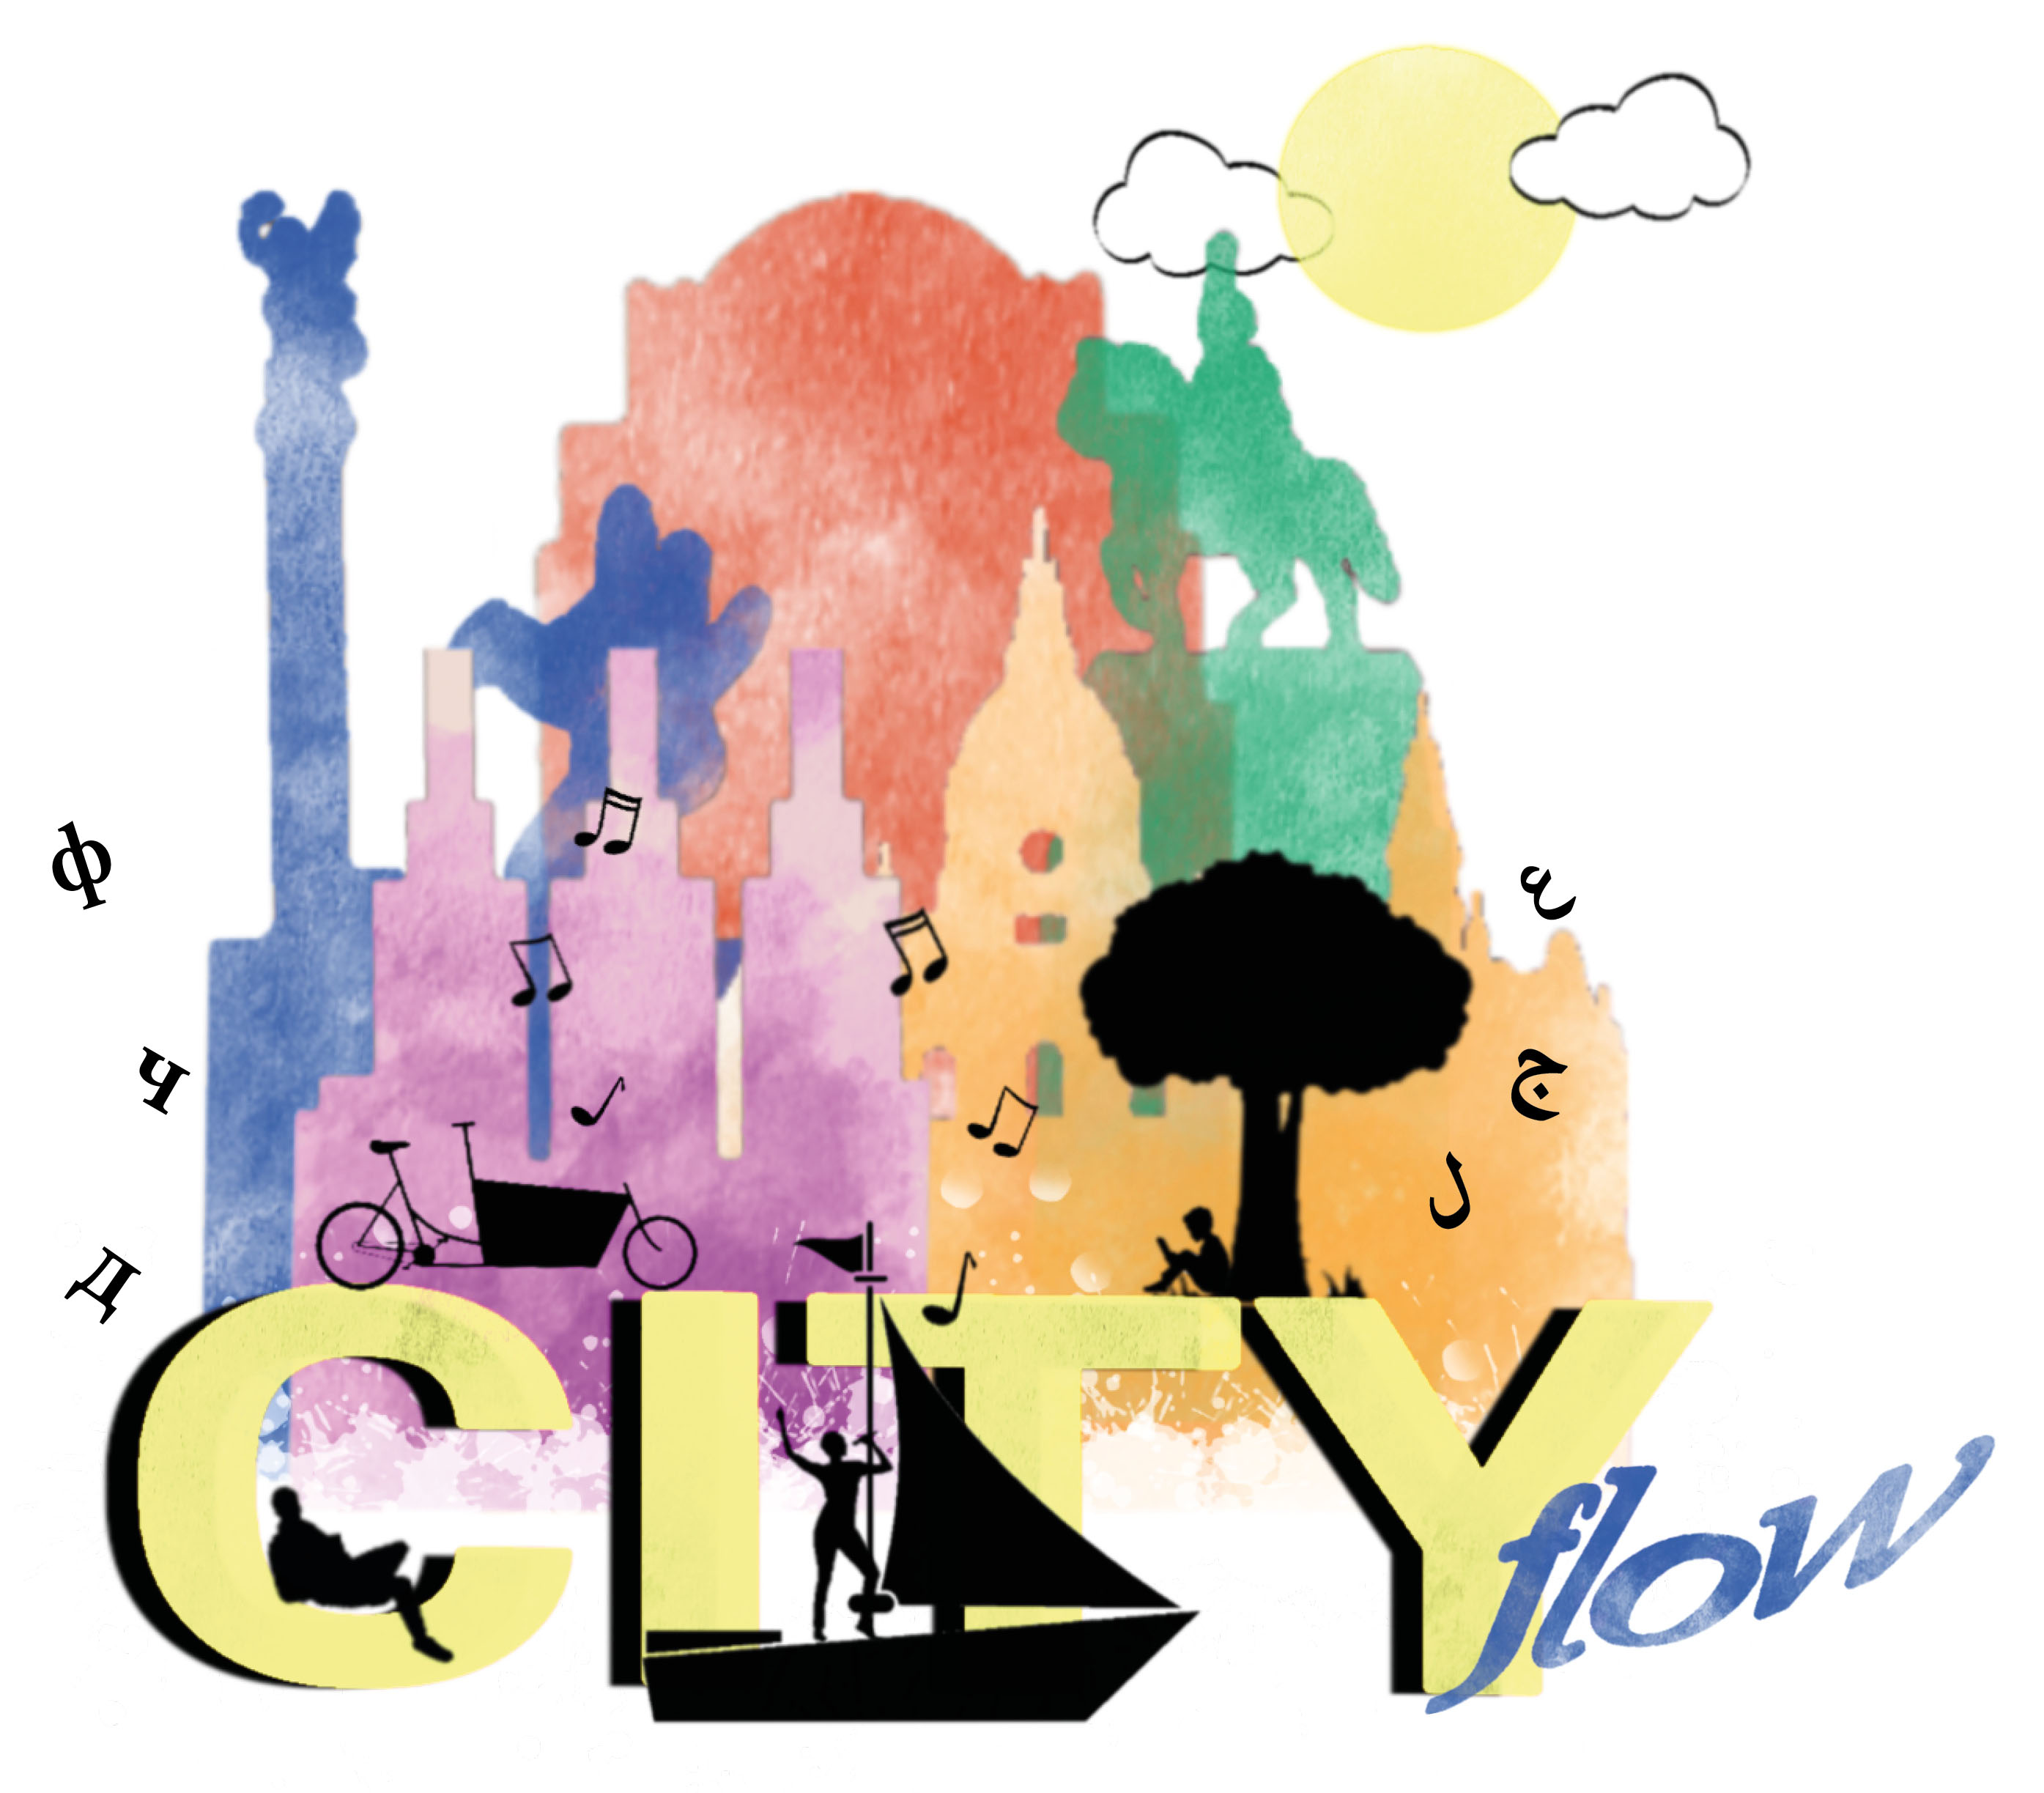 City Flow - Ein mobiles transkulturelles Festival